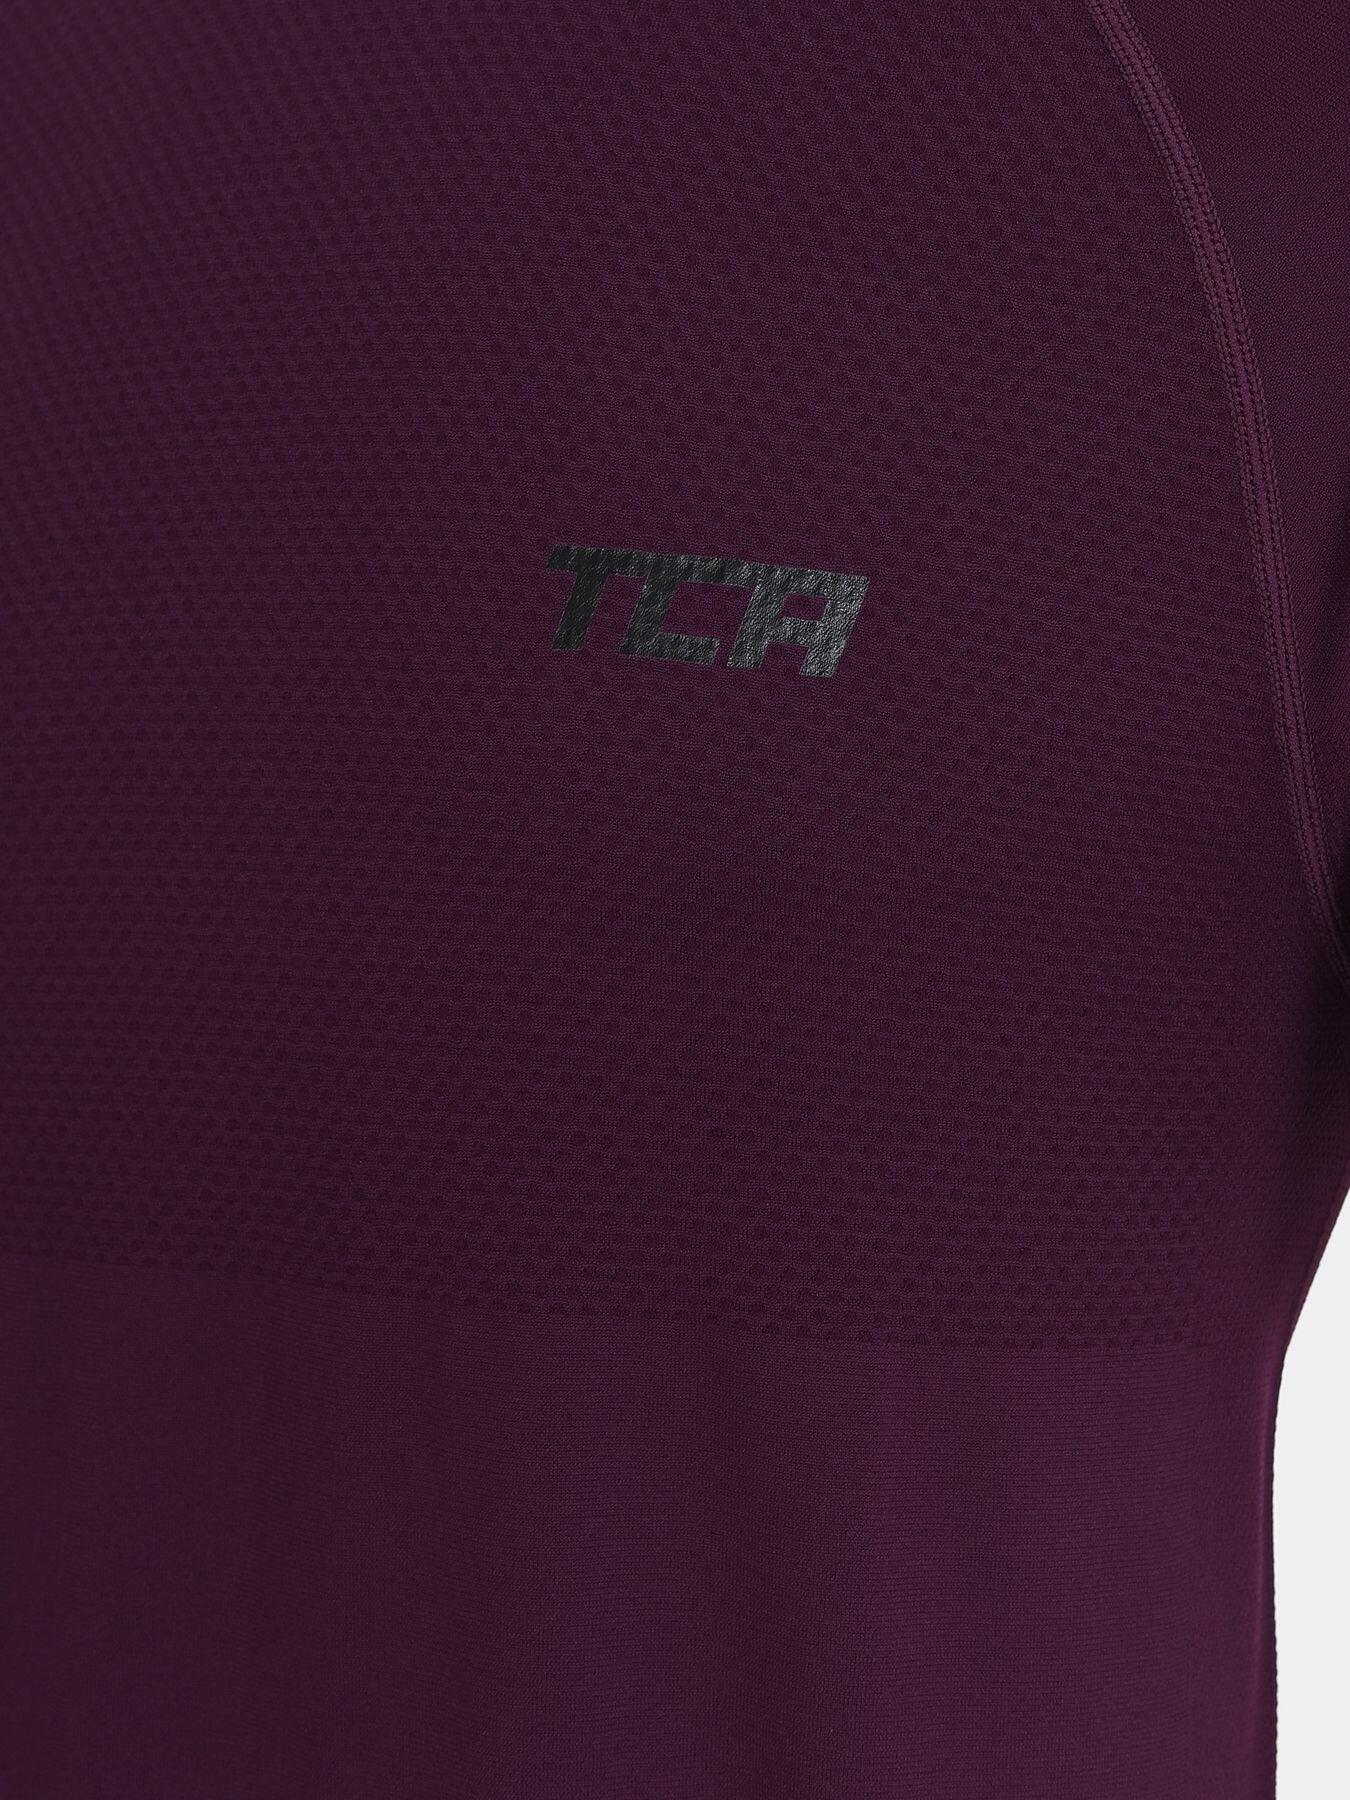 Men's Superknit Breathable Running Gym T-Shirt - Purple 4/5